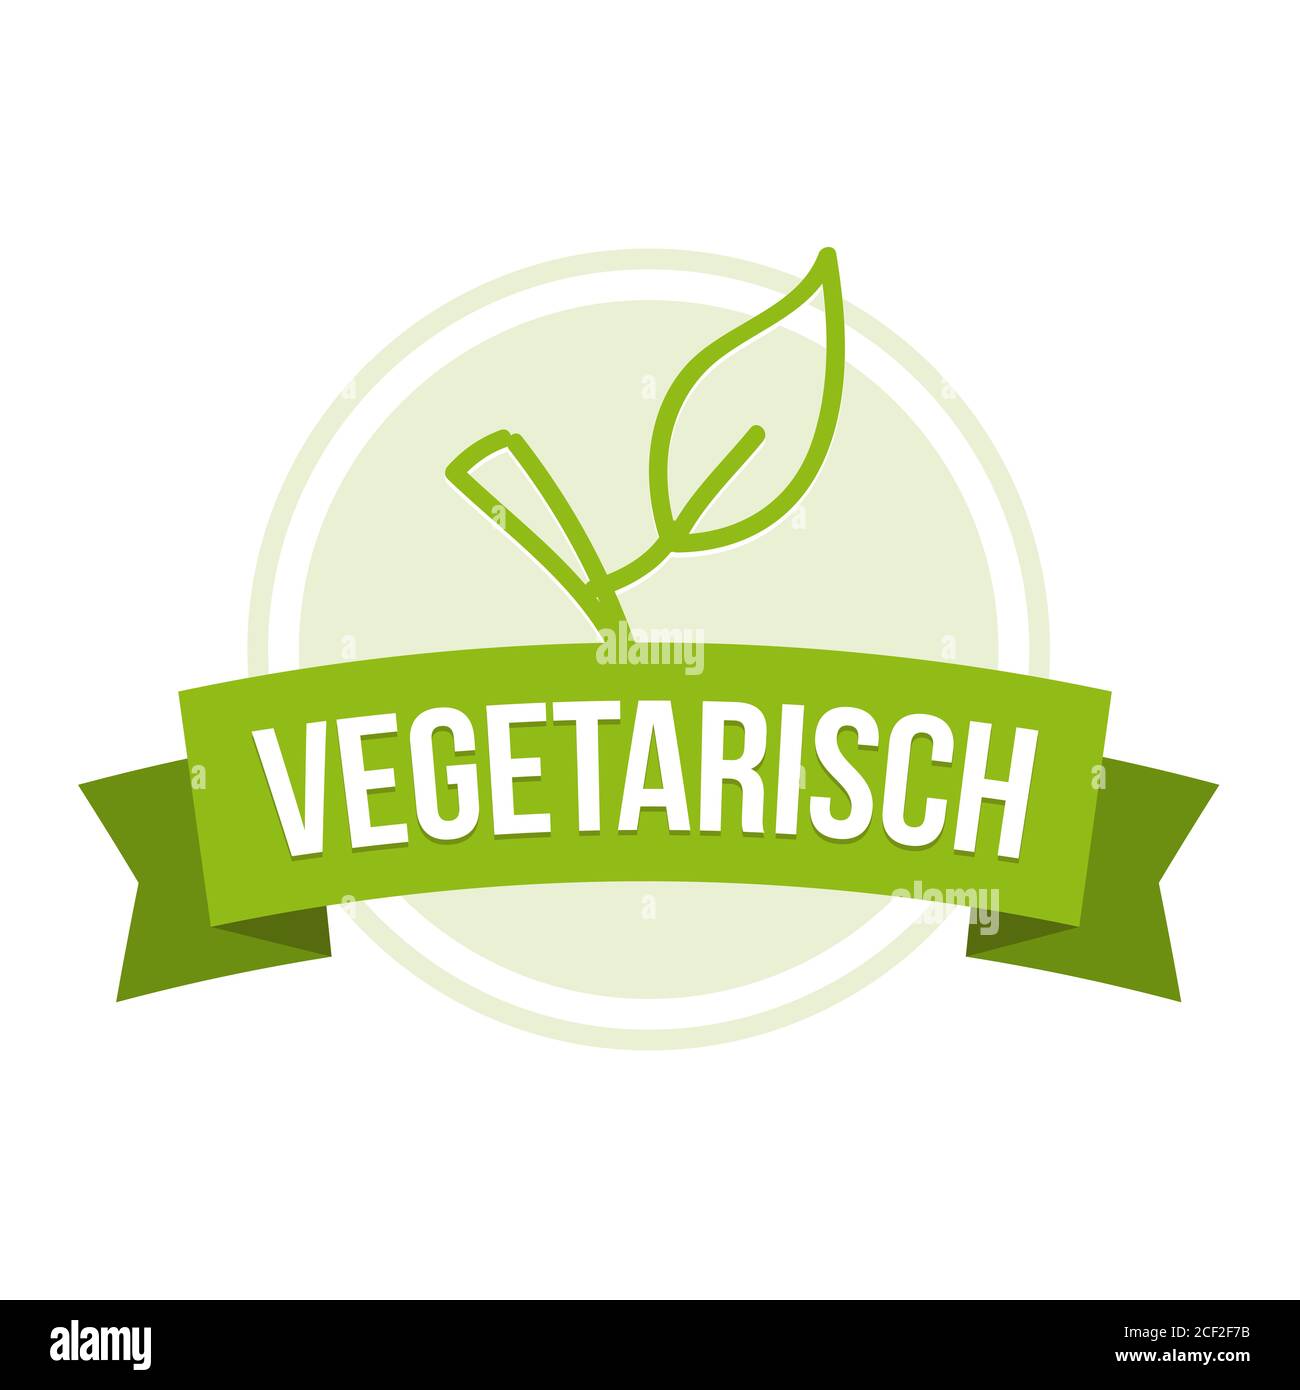 Vegetarisch Siegel - Gesunde vegane Ernährung Foto de stock